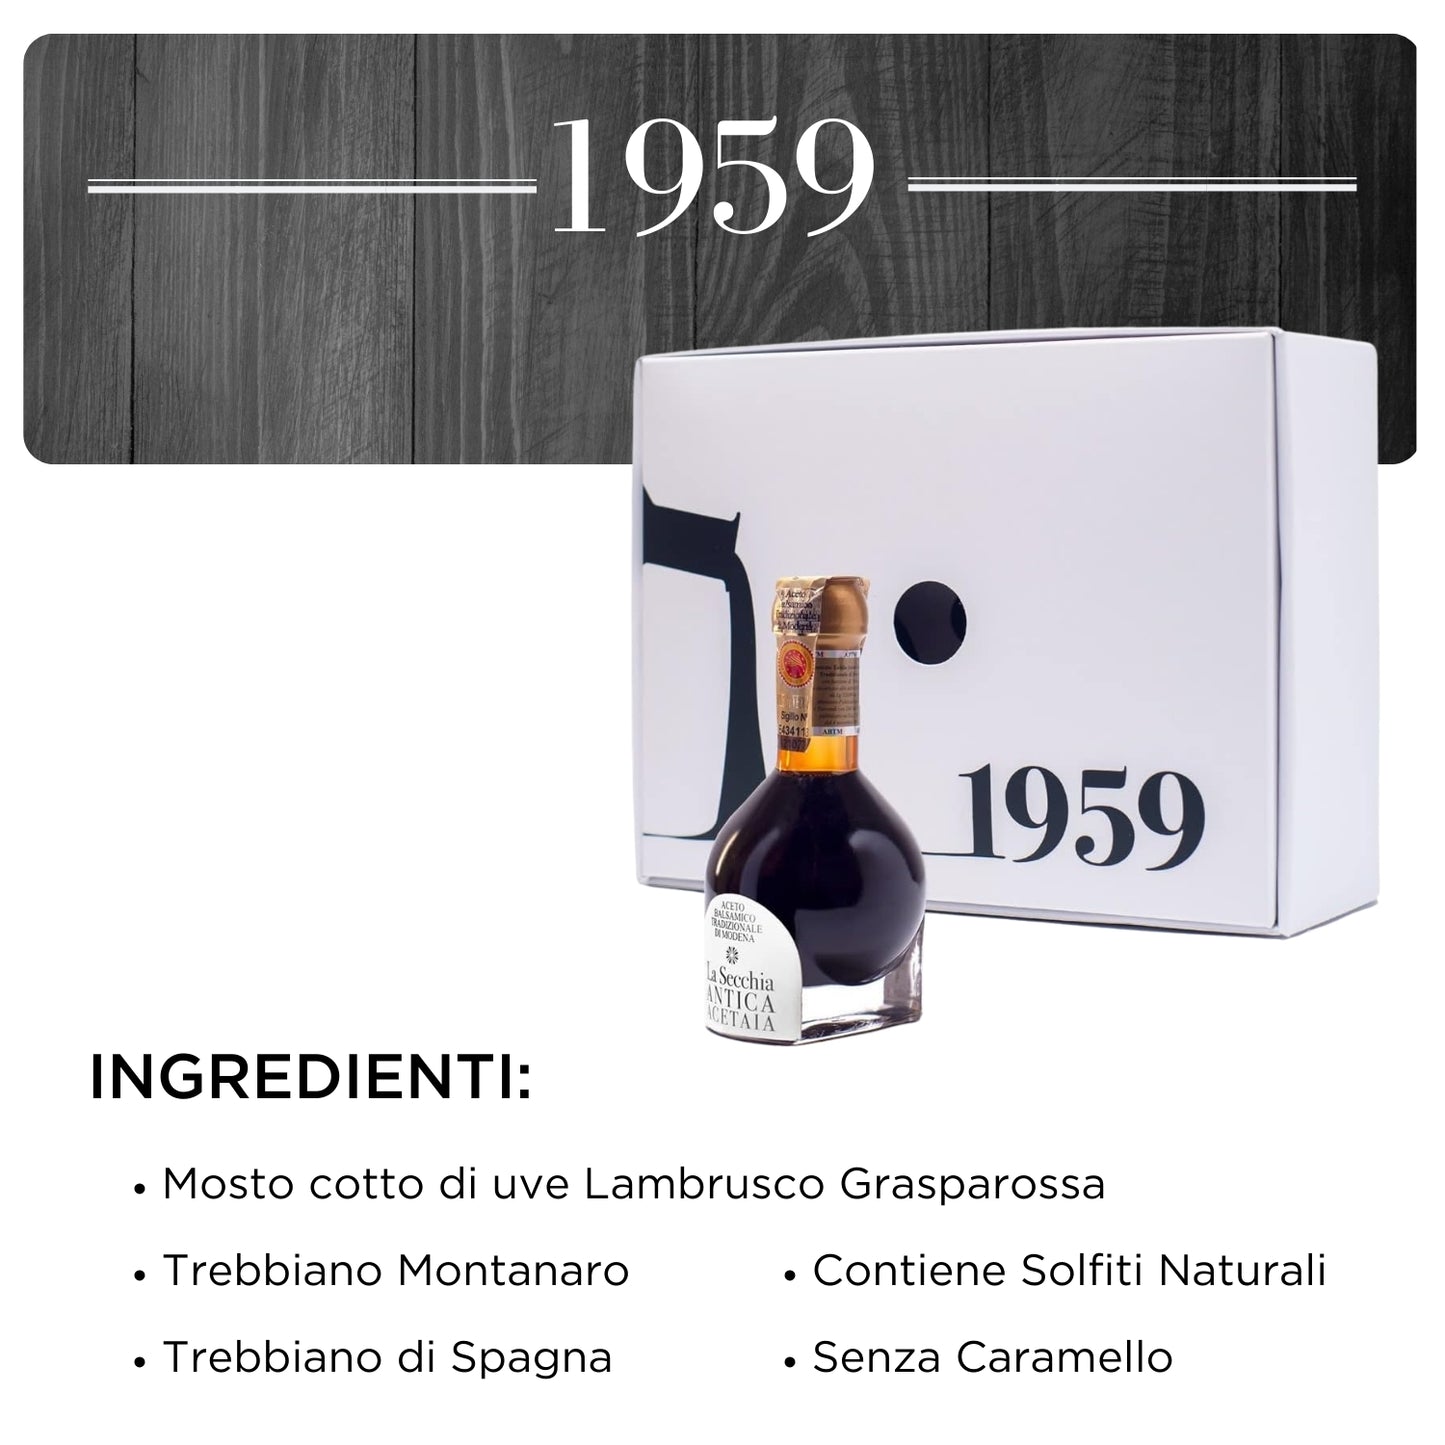 Traditional Balsamic Vinegar of Modena DOP 1959 RESERVE